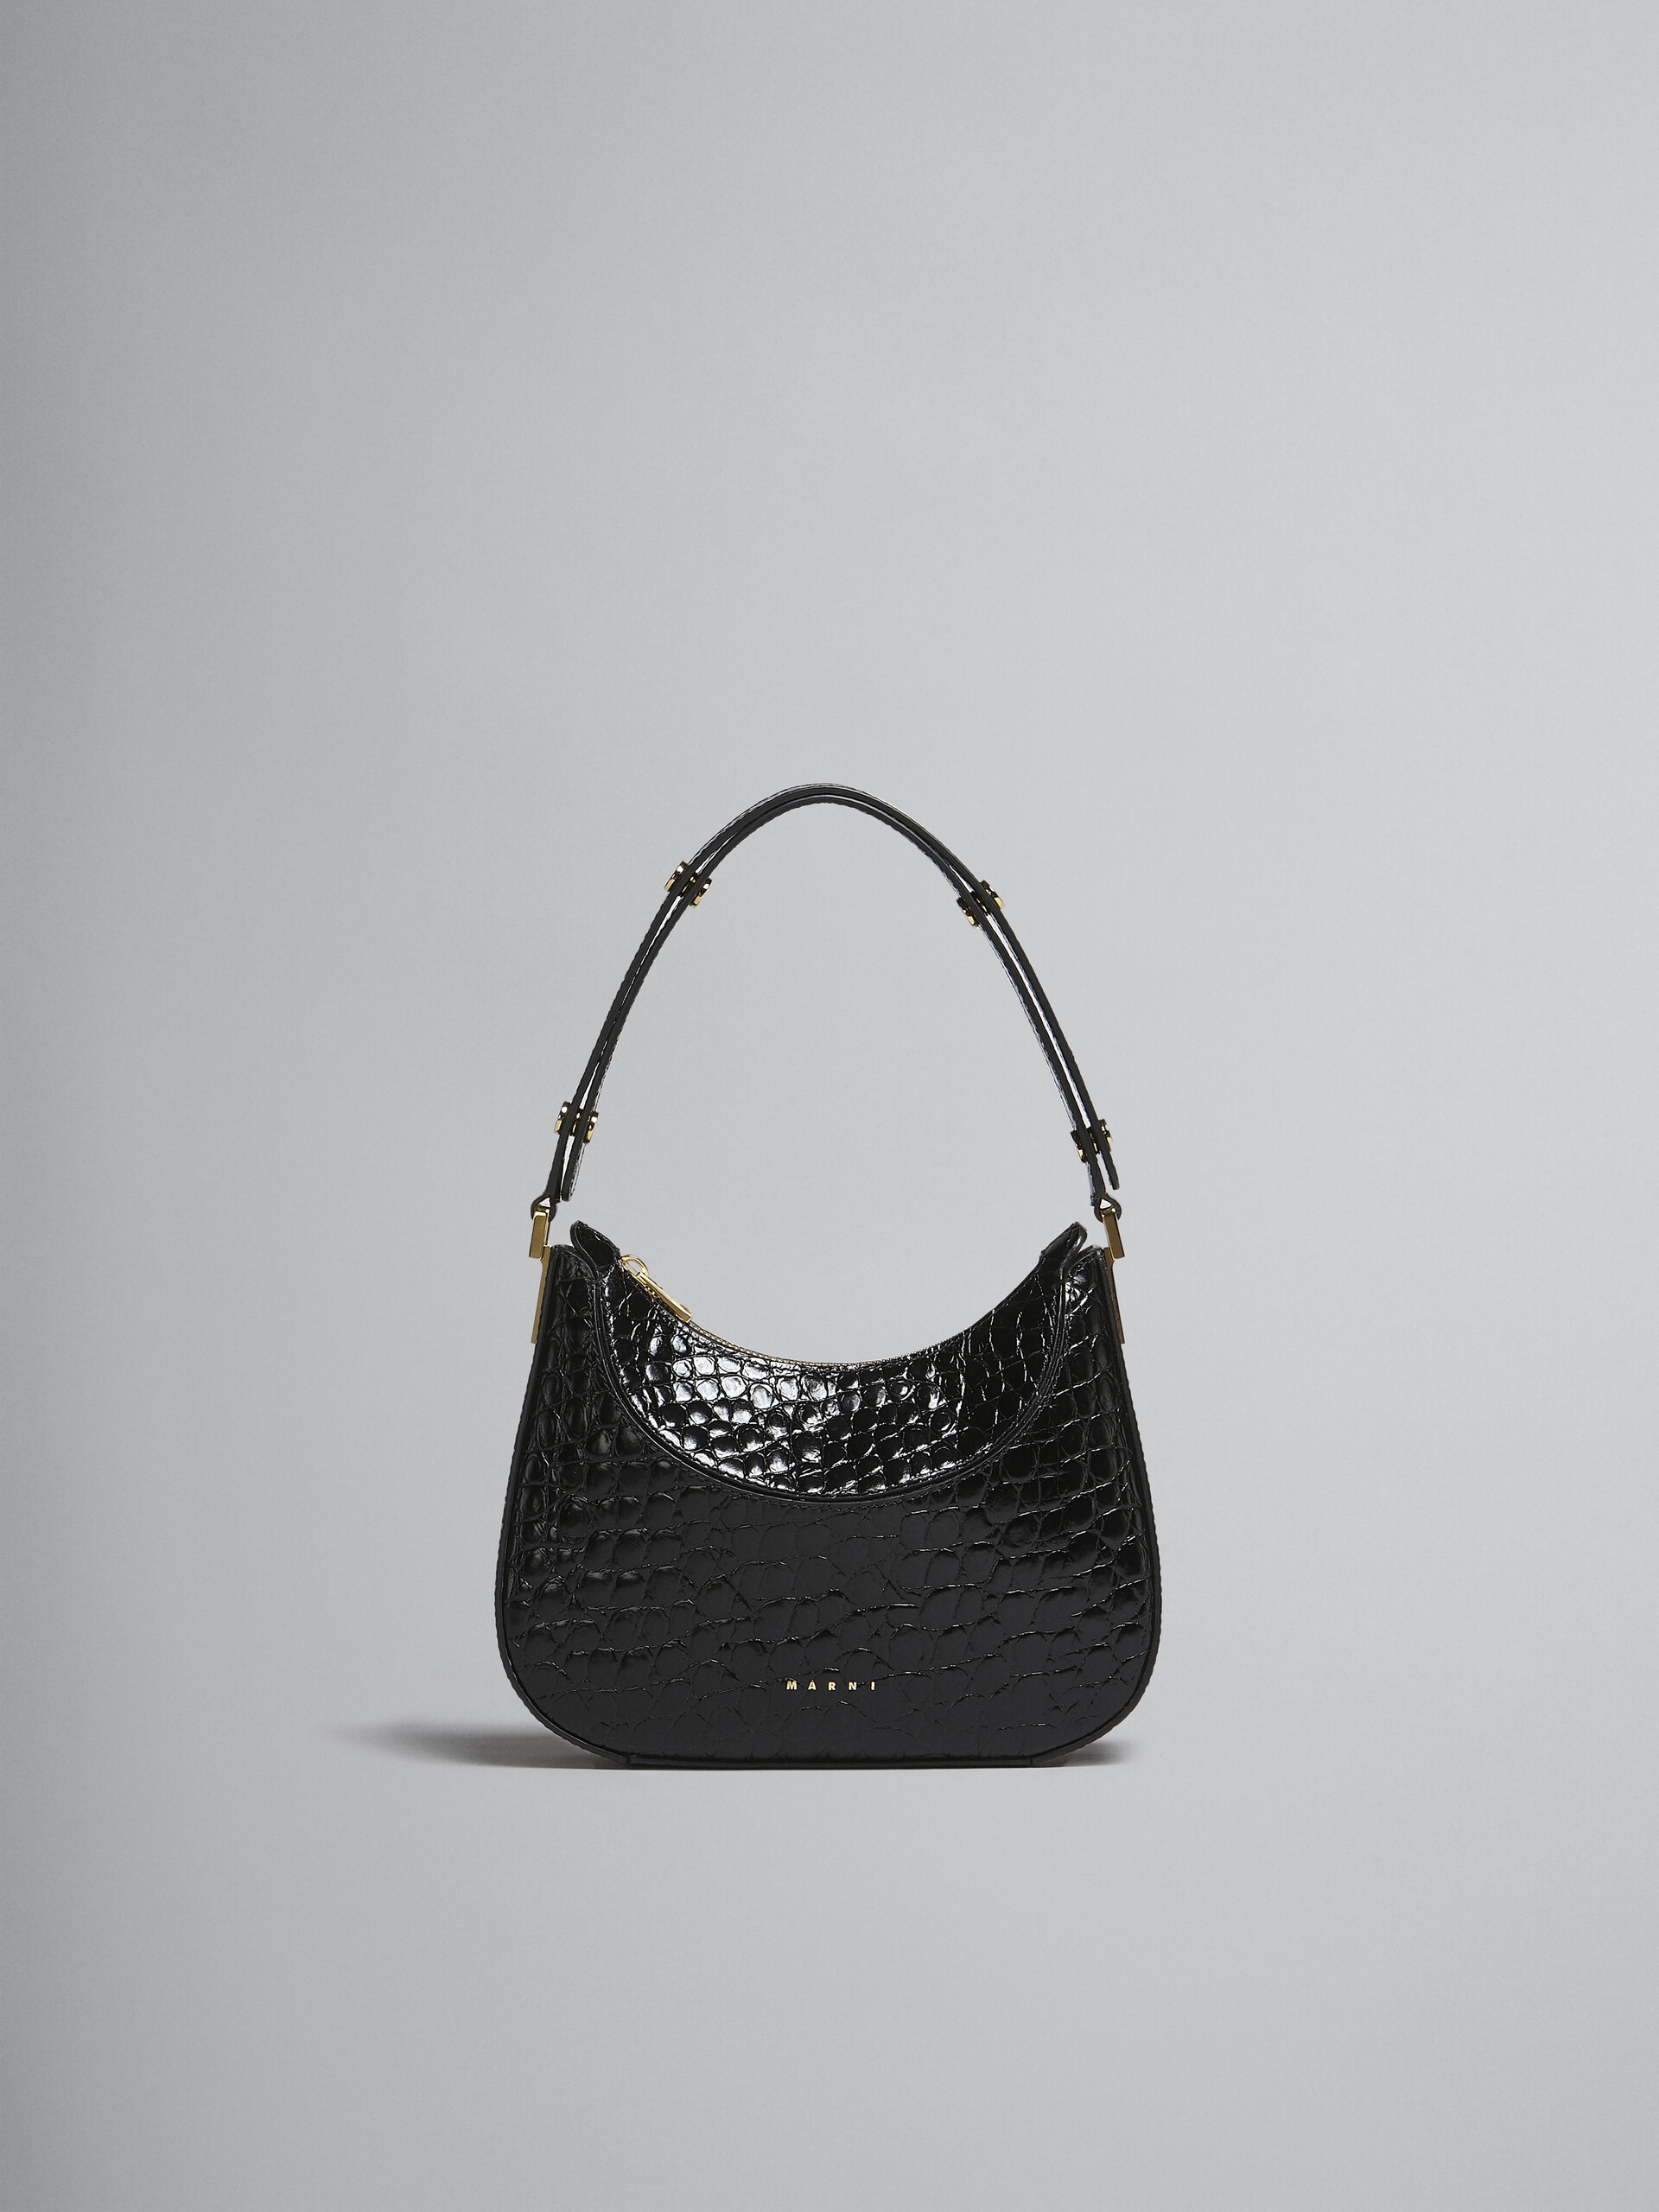 Milano Mini Bag in black croco print leather - Handbags - Image 1